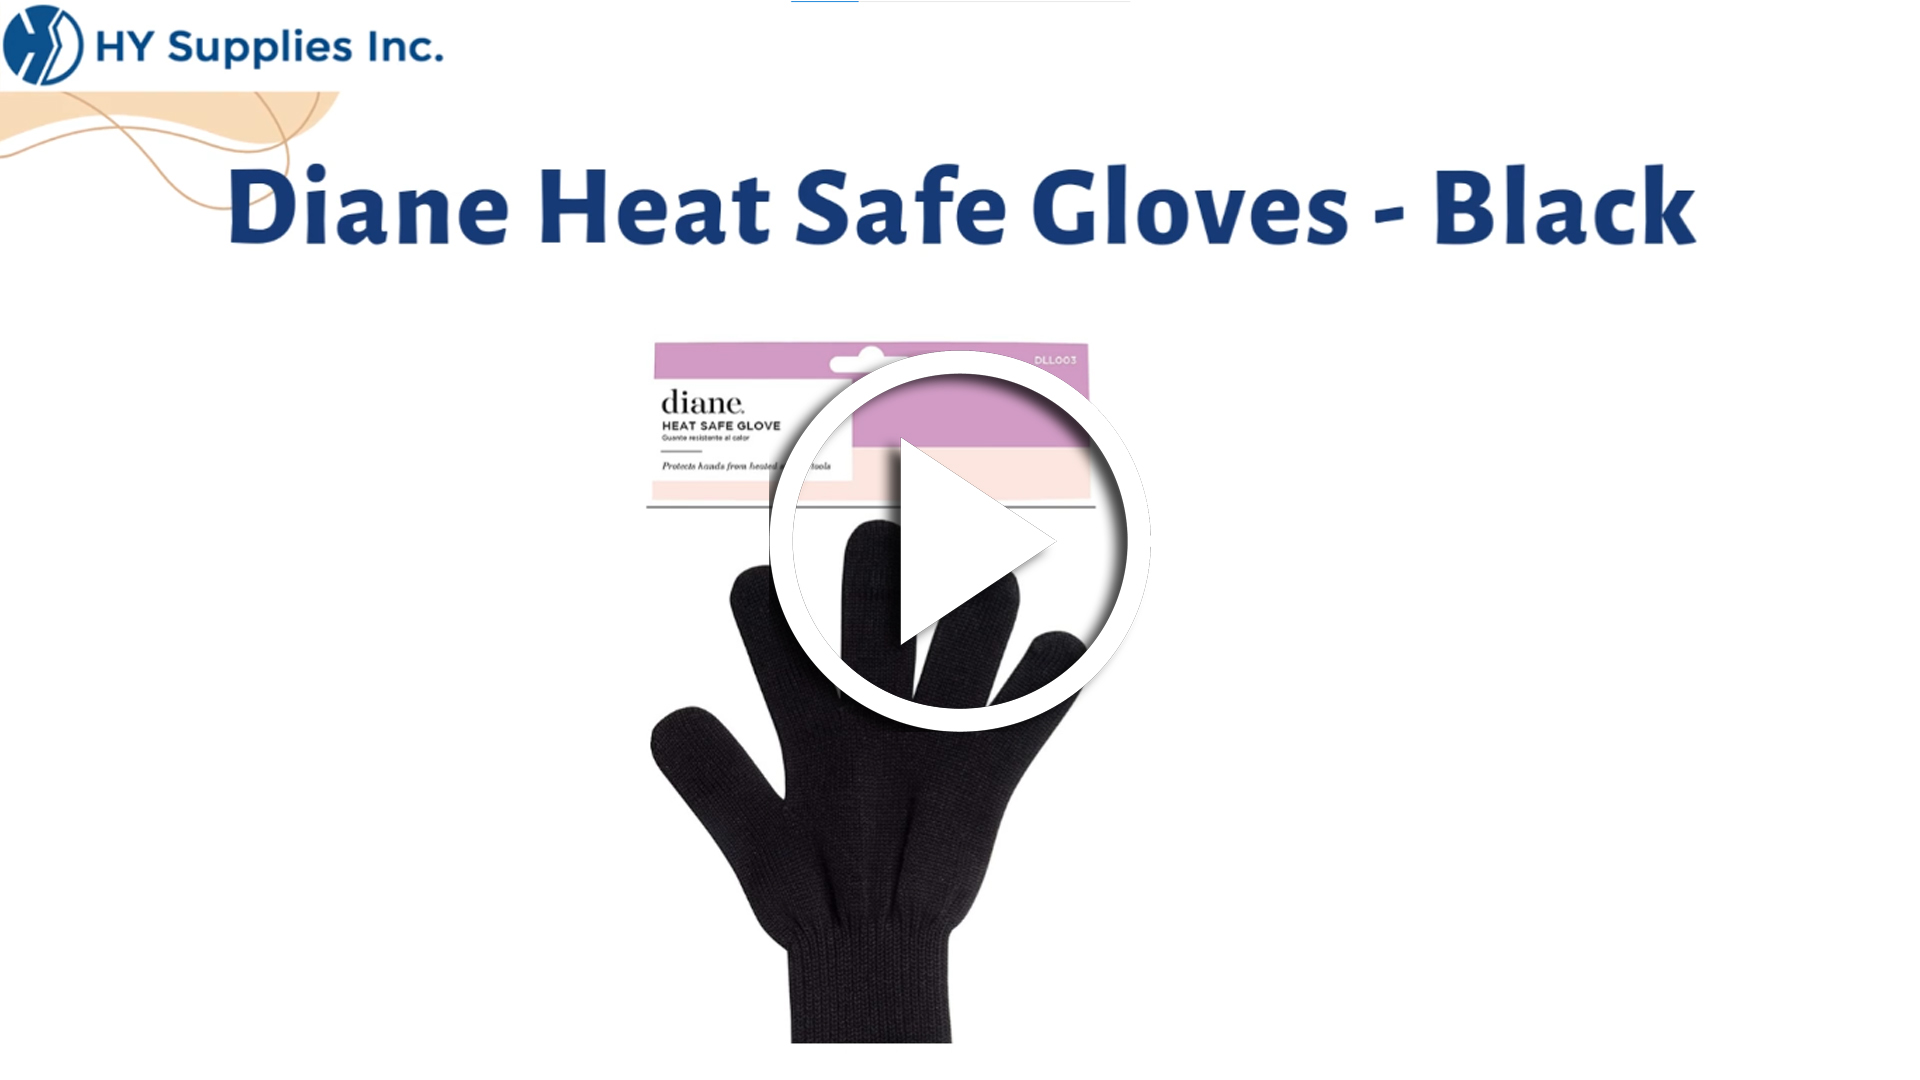 Diane Heat Safe Gloves - Black